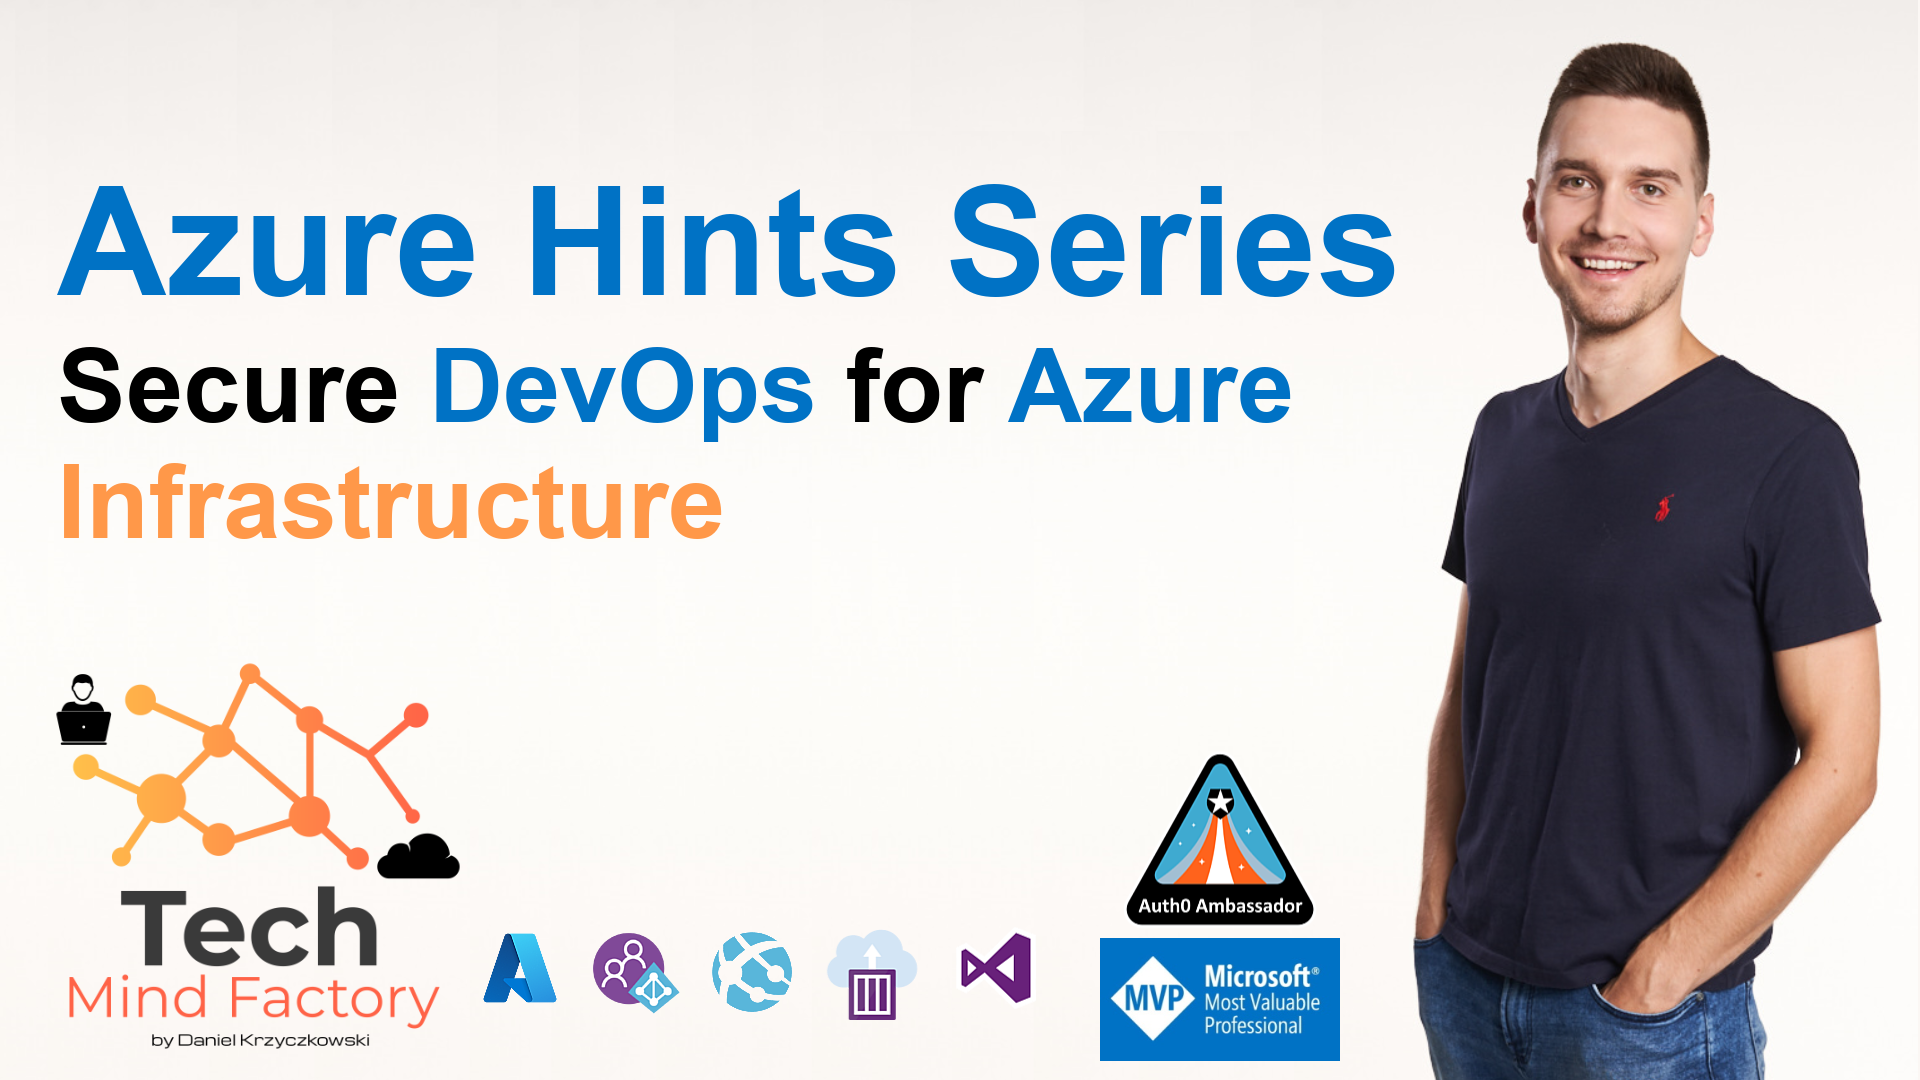 Azure Hints Series - Secure DevOps for Azure Infrastructure